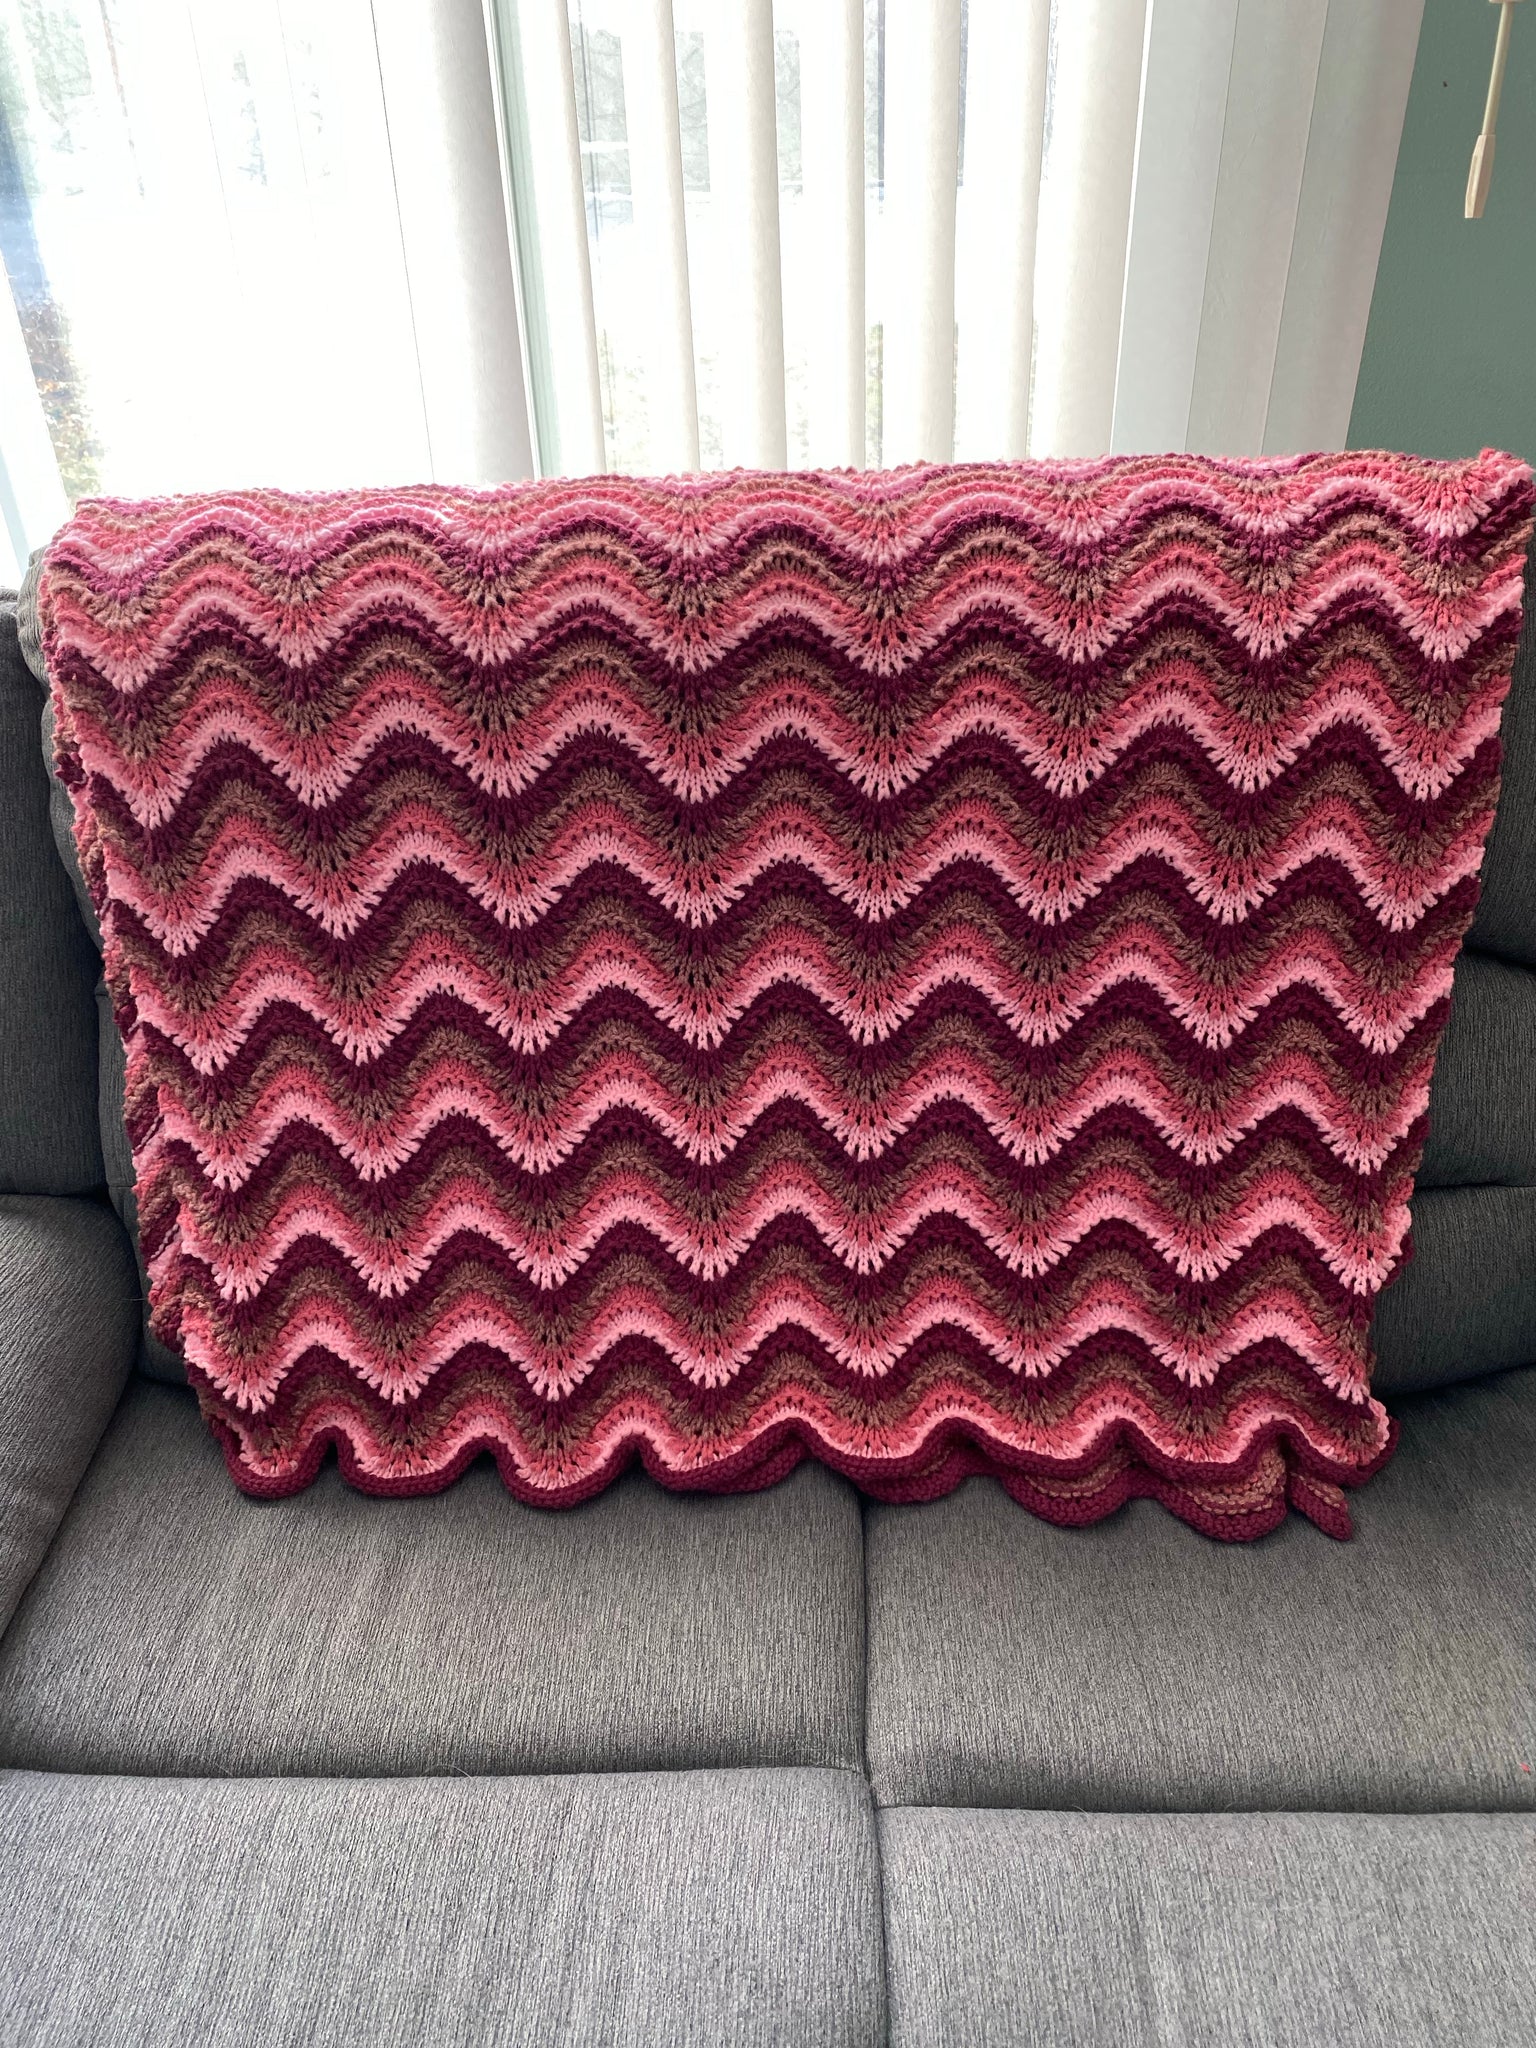 Wavy pinks vintage knitted blanket